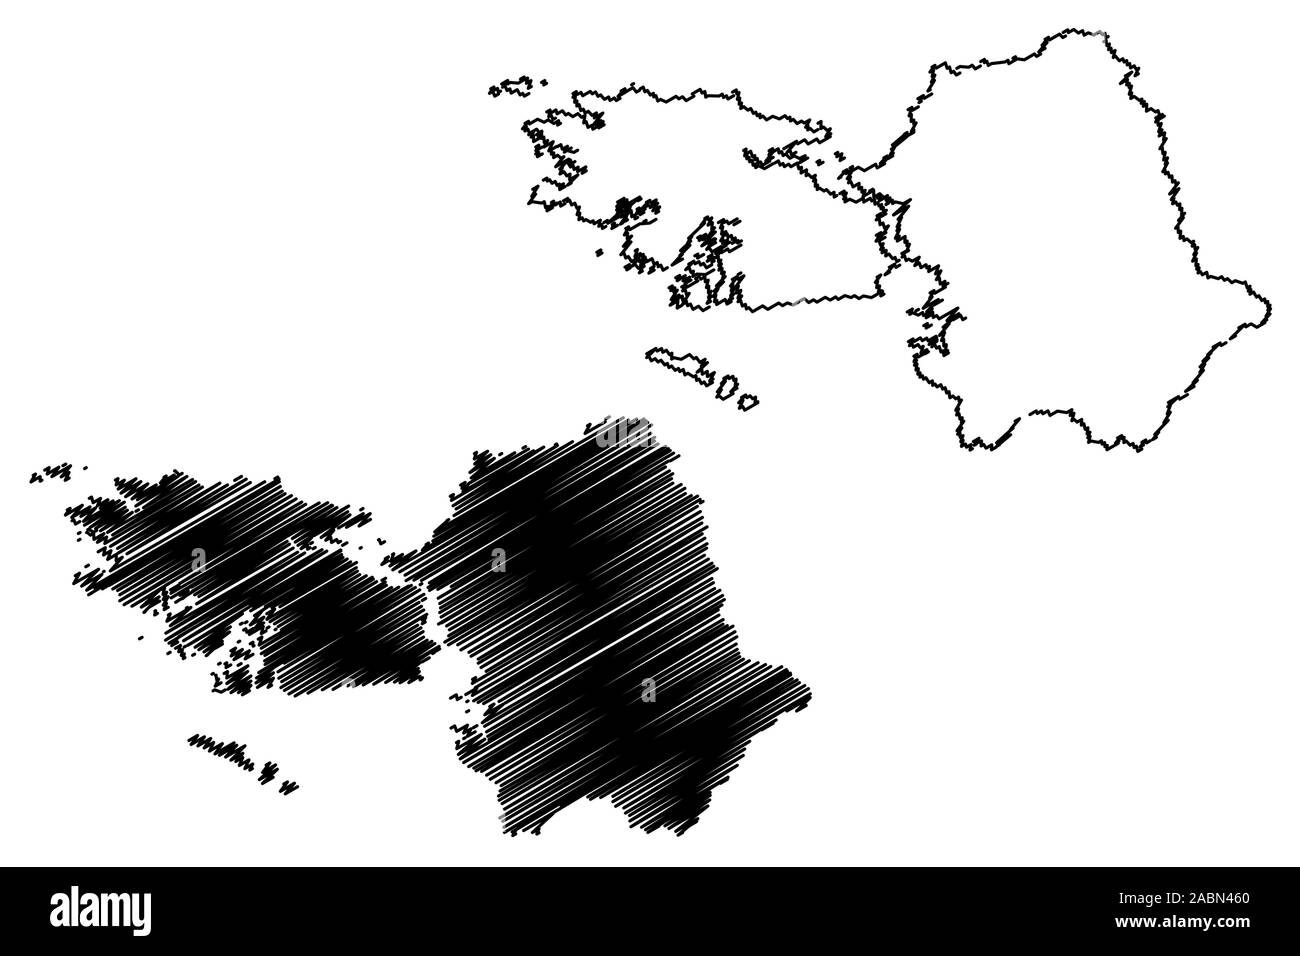 Galway County Council (Irland, Grafschaften Irlands) Karte Vektor-illustration, kritzeln Skizze, Galway Karte anzeigen Stock Vektor